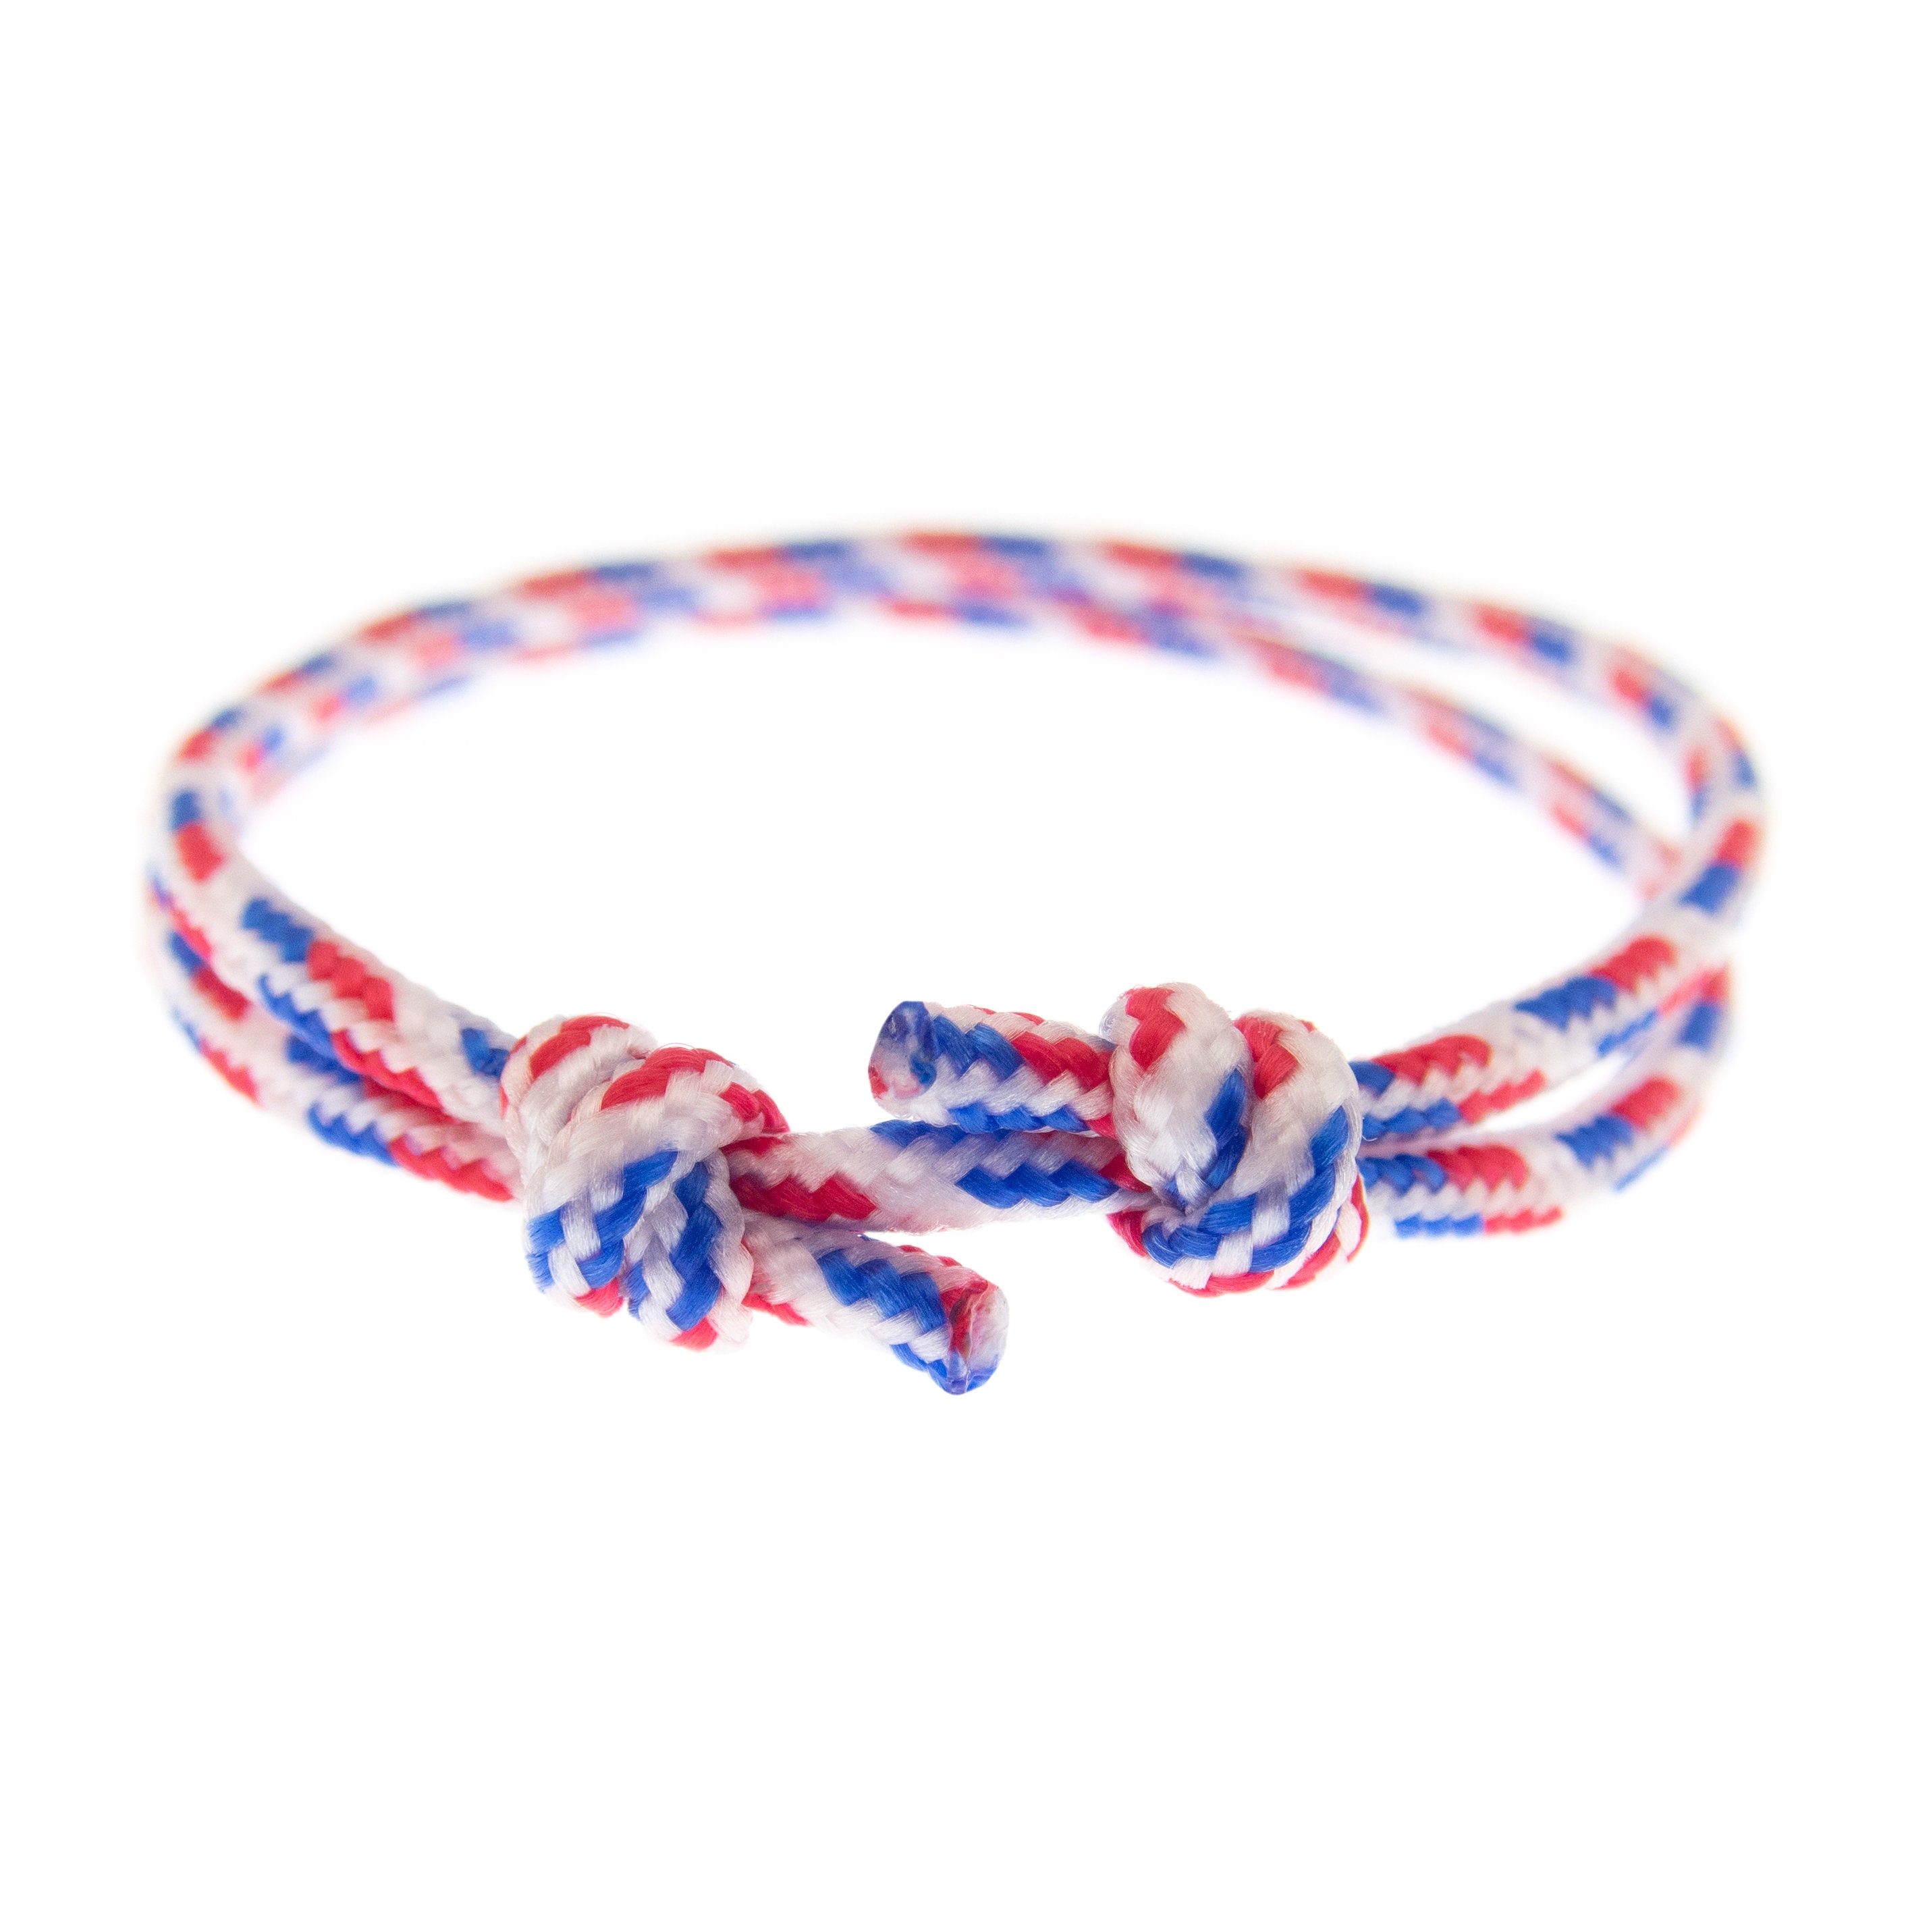 Mens Nautical Bracelet, Mens Nautical Knot Bracelet, Men's